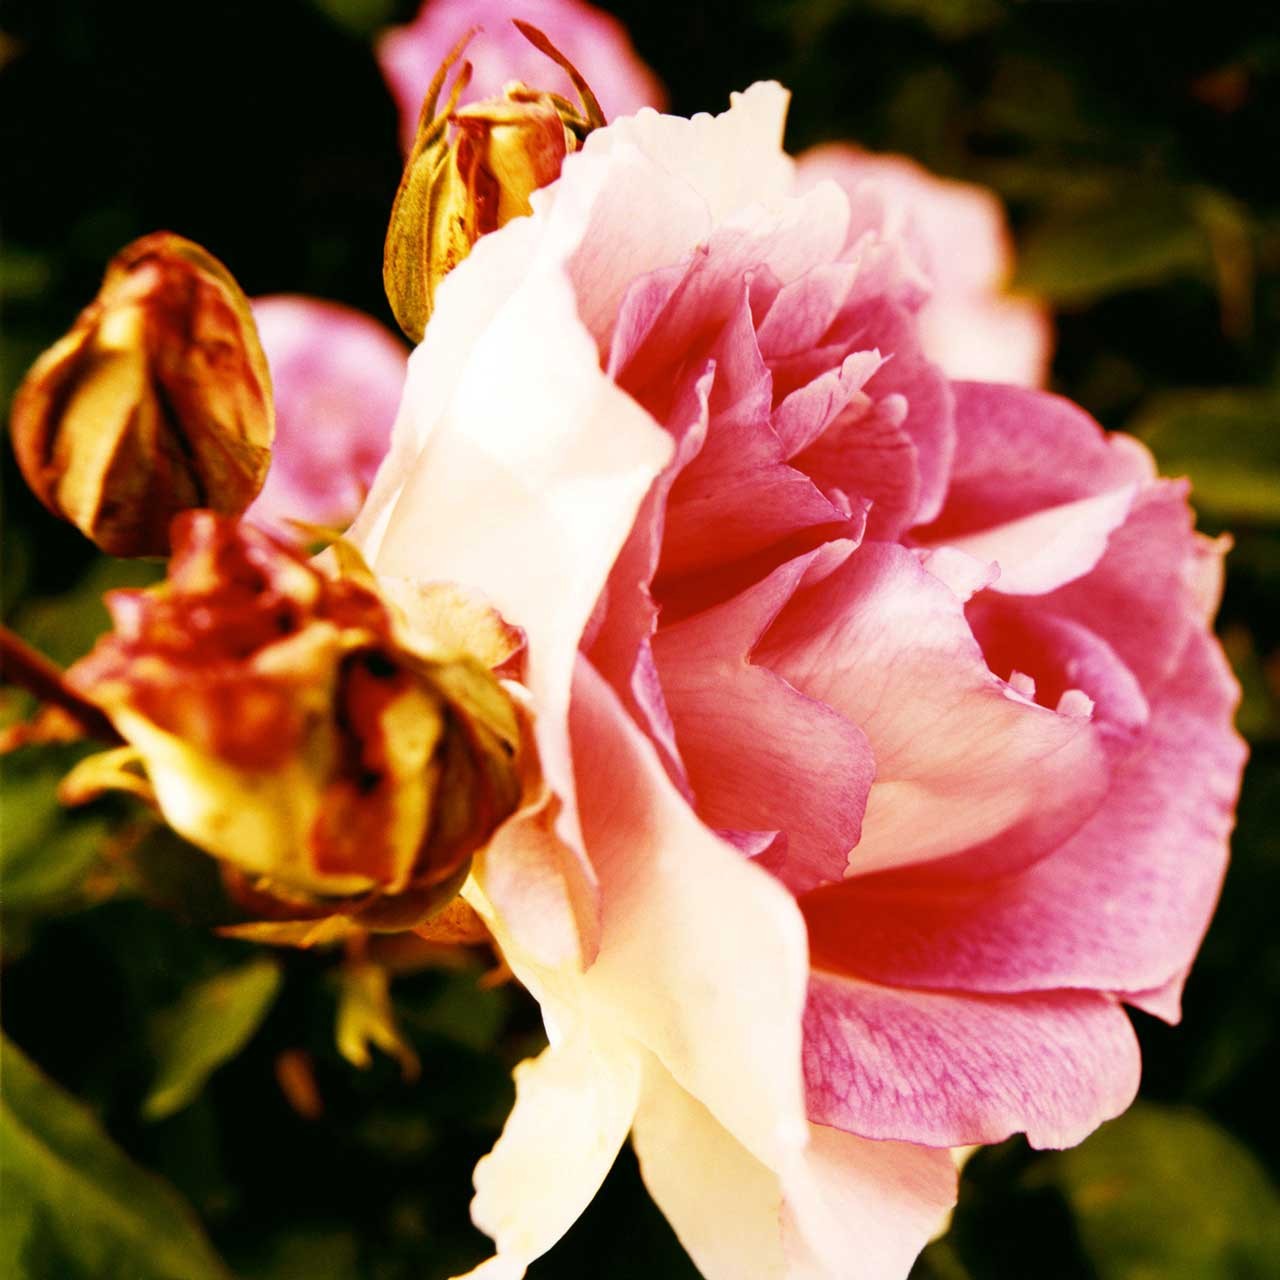 Laure-Maud_19_photographe_jardin-fleur-rose_3